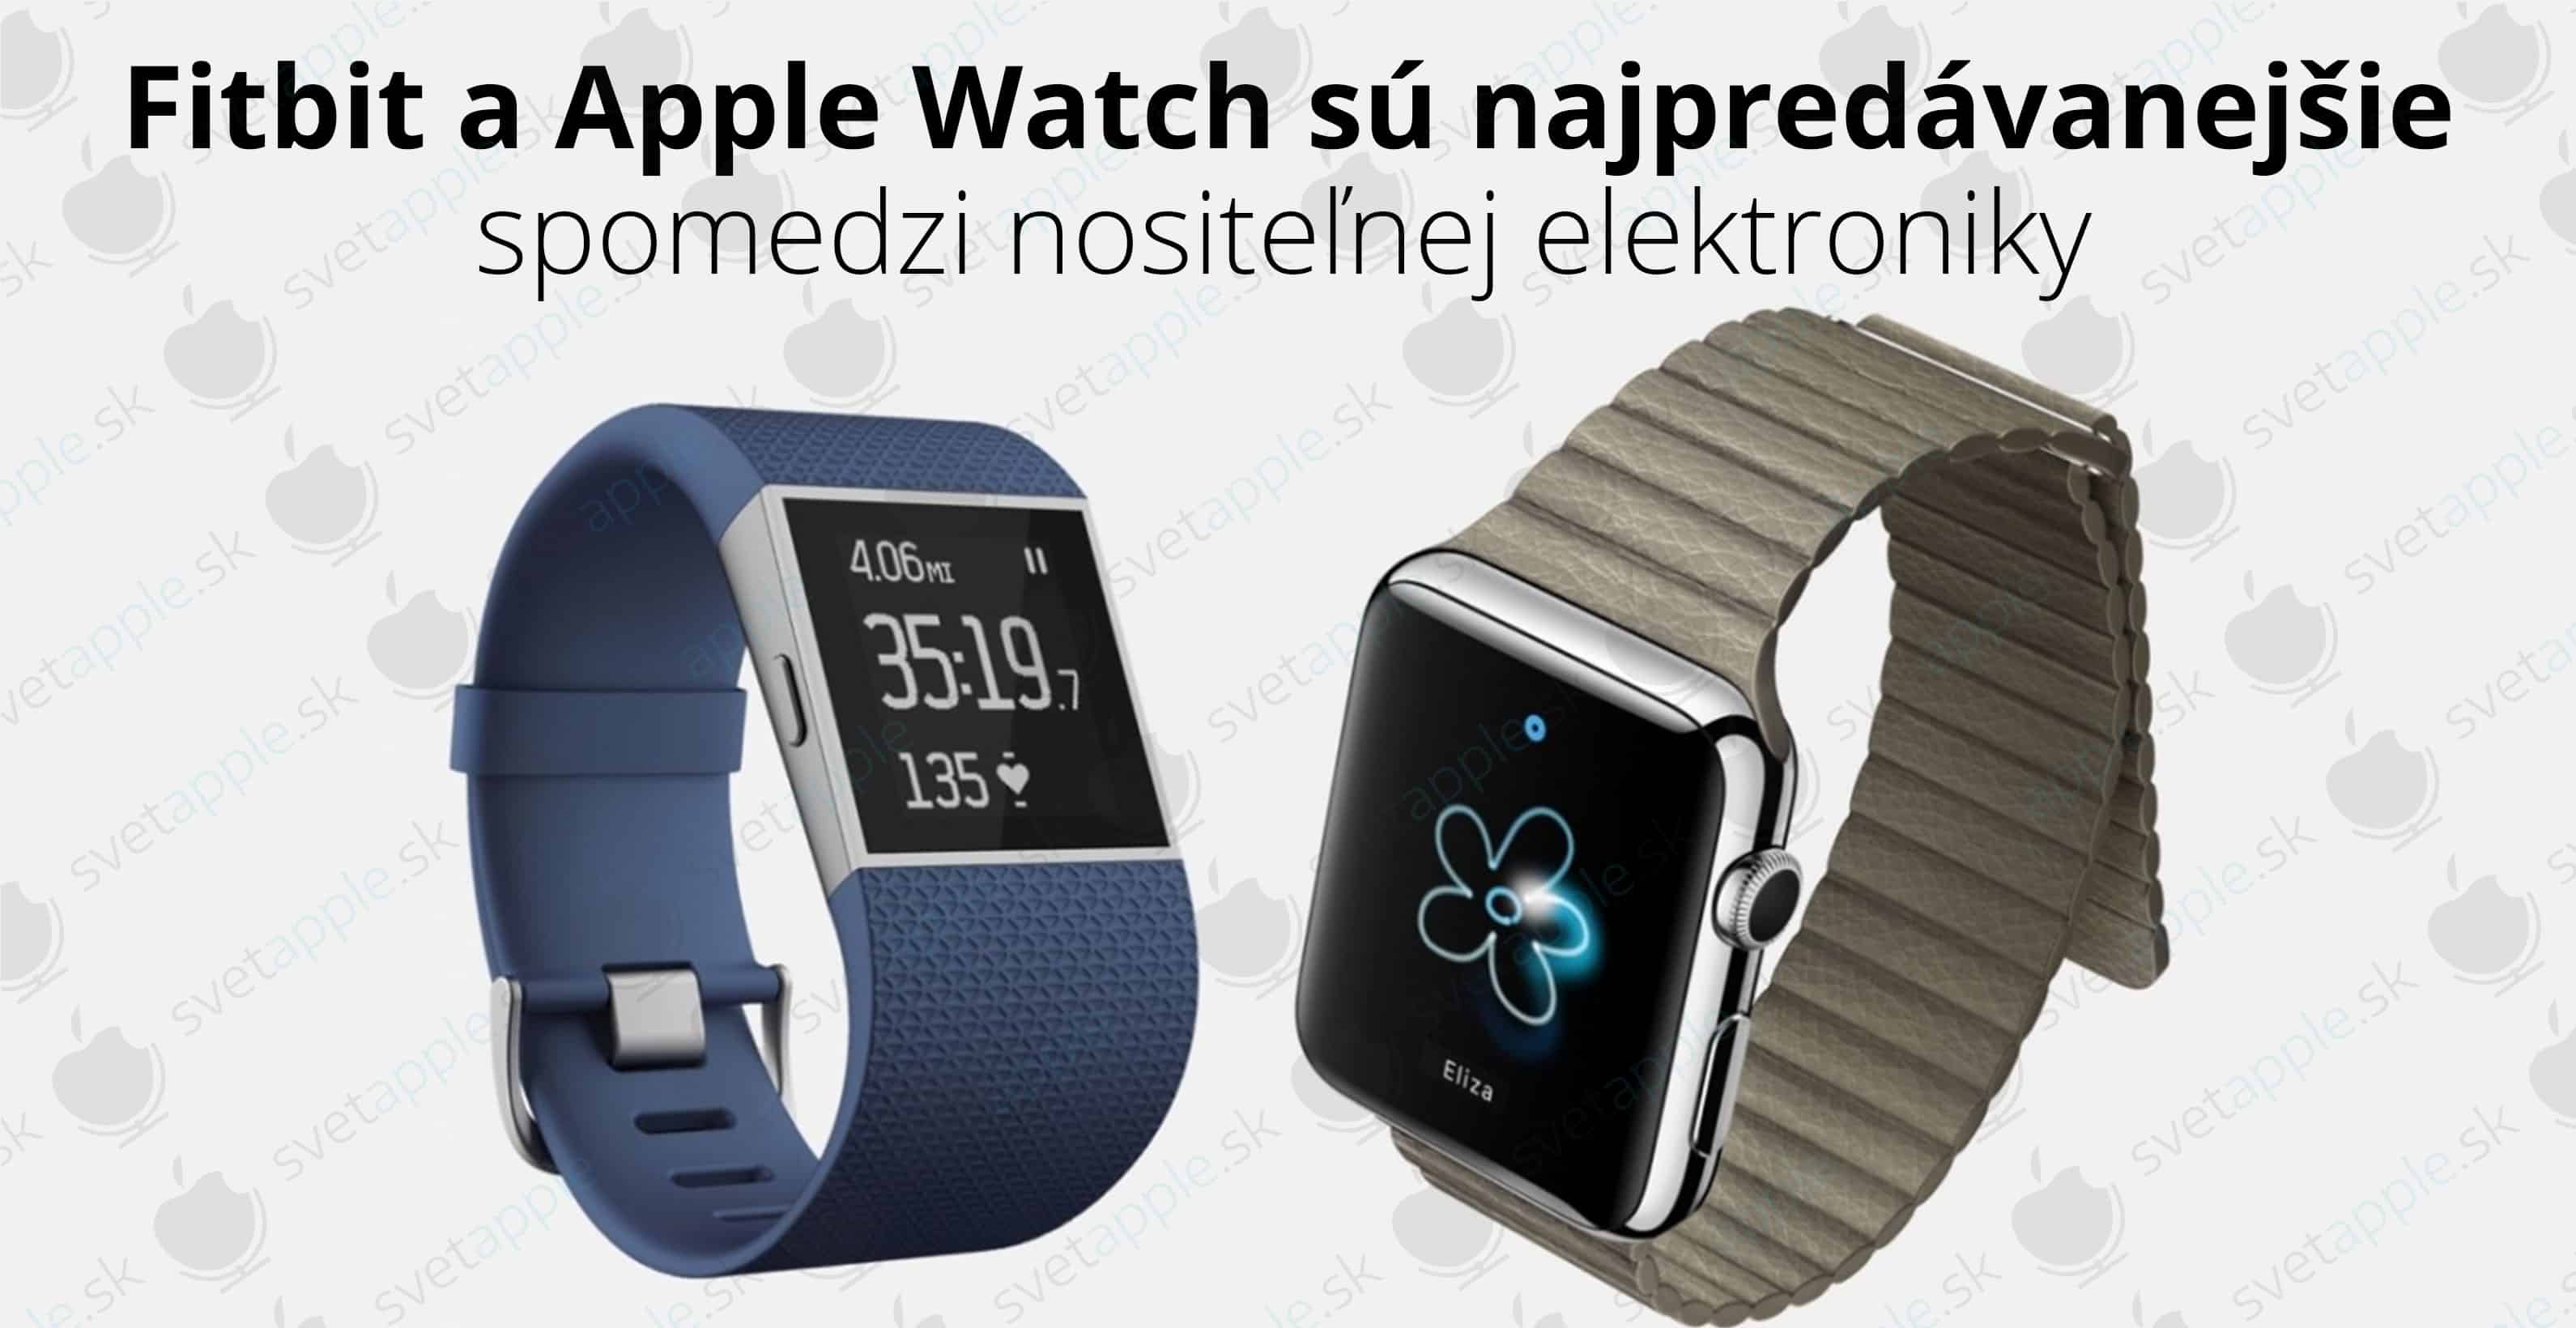 fibit-apple-watch-najpredavanejsie---titulná-fotografia---SvetApple